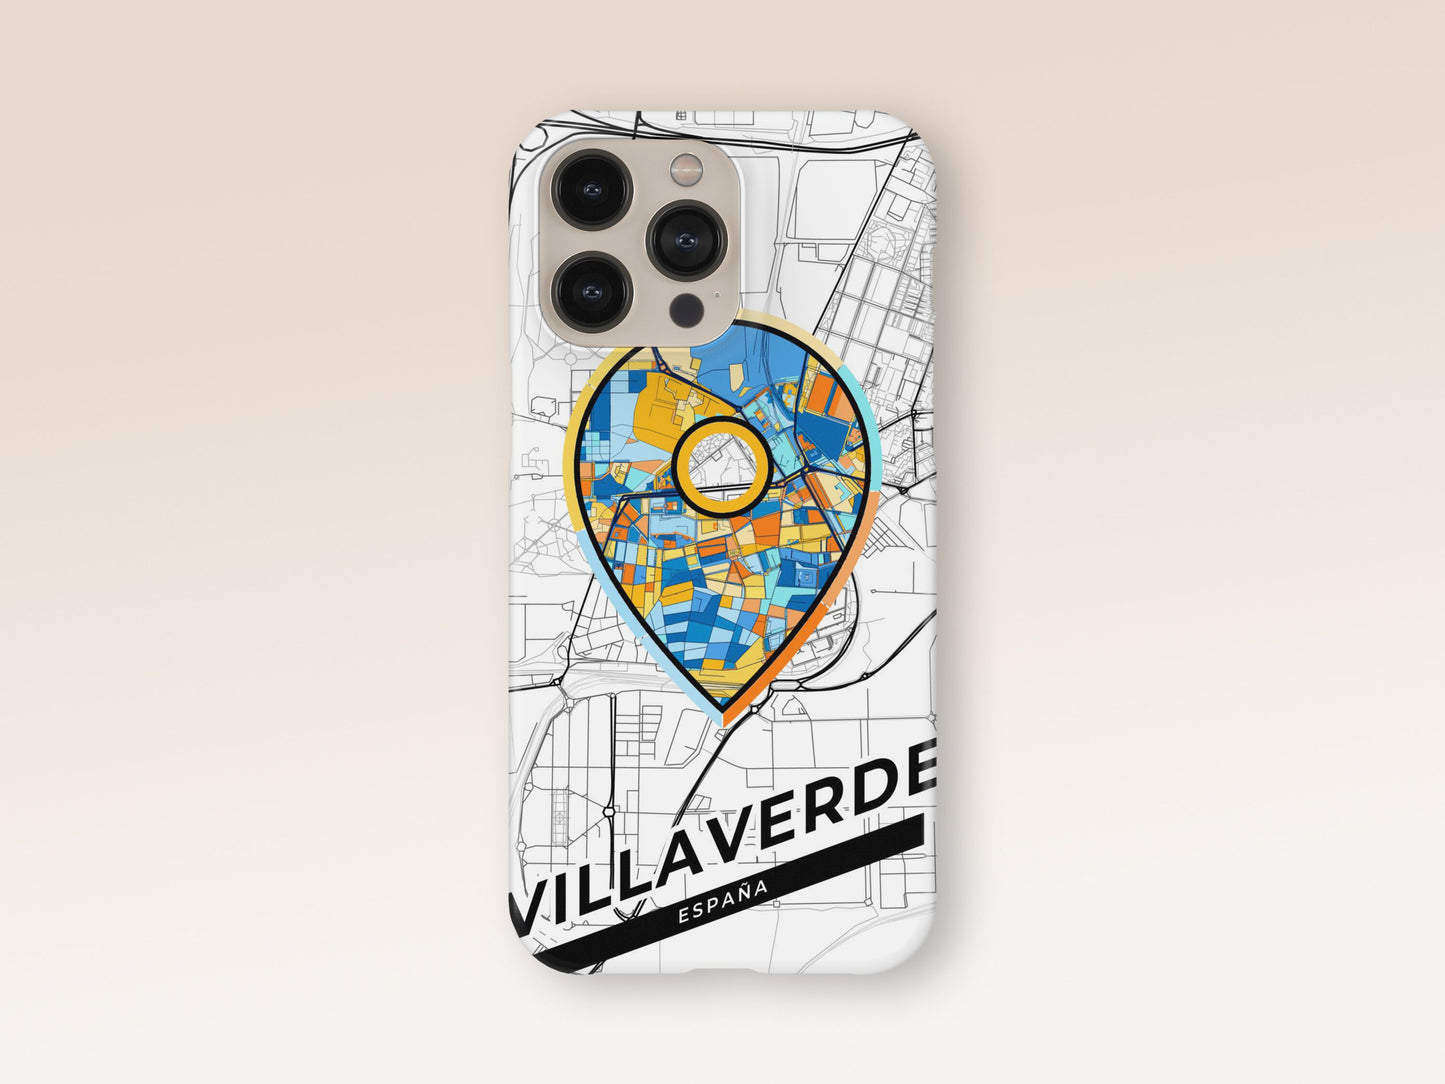 Villaverde Spain slim phone case with colorful icon 1